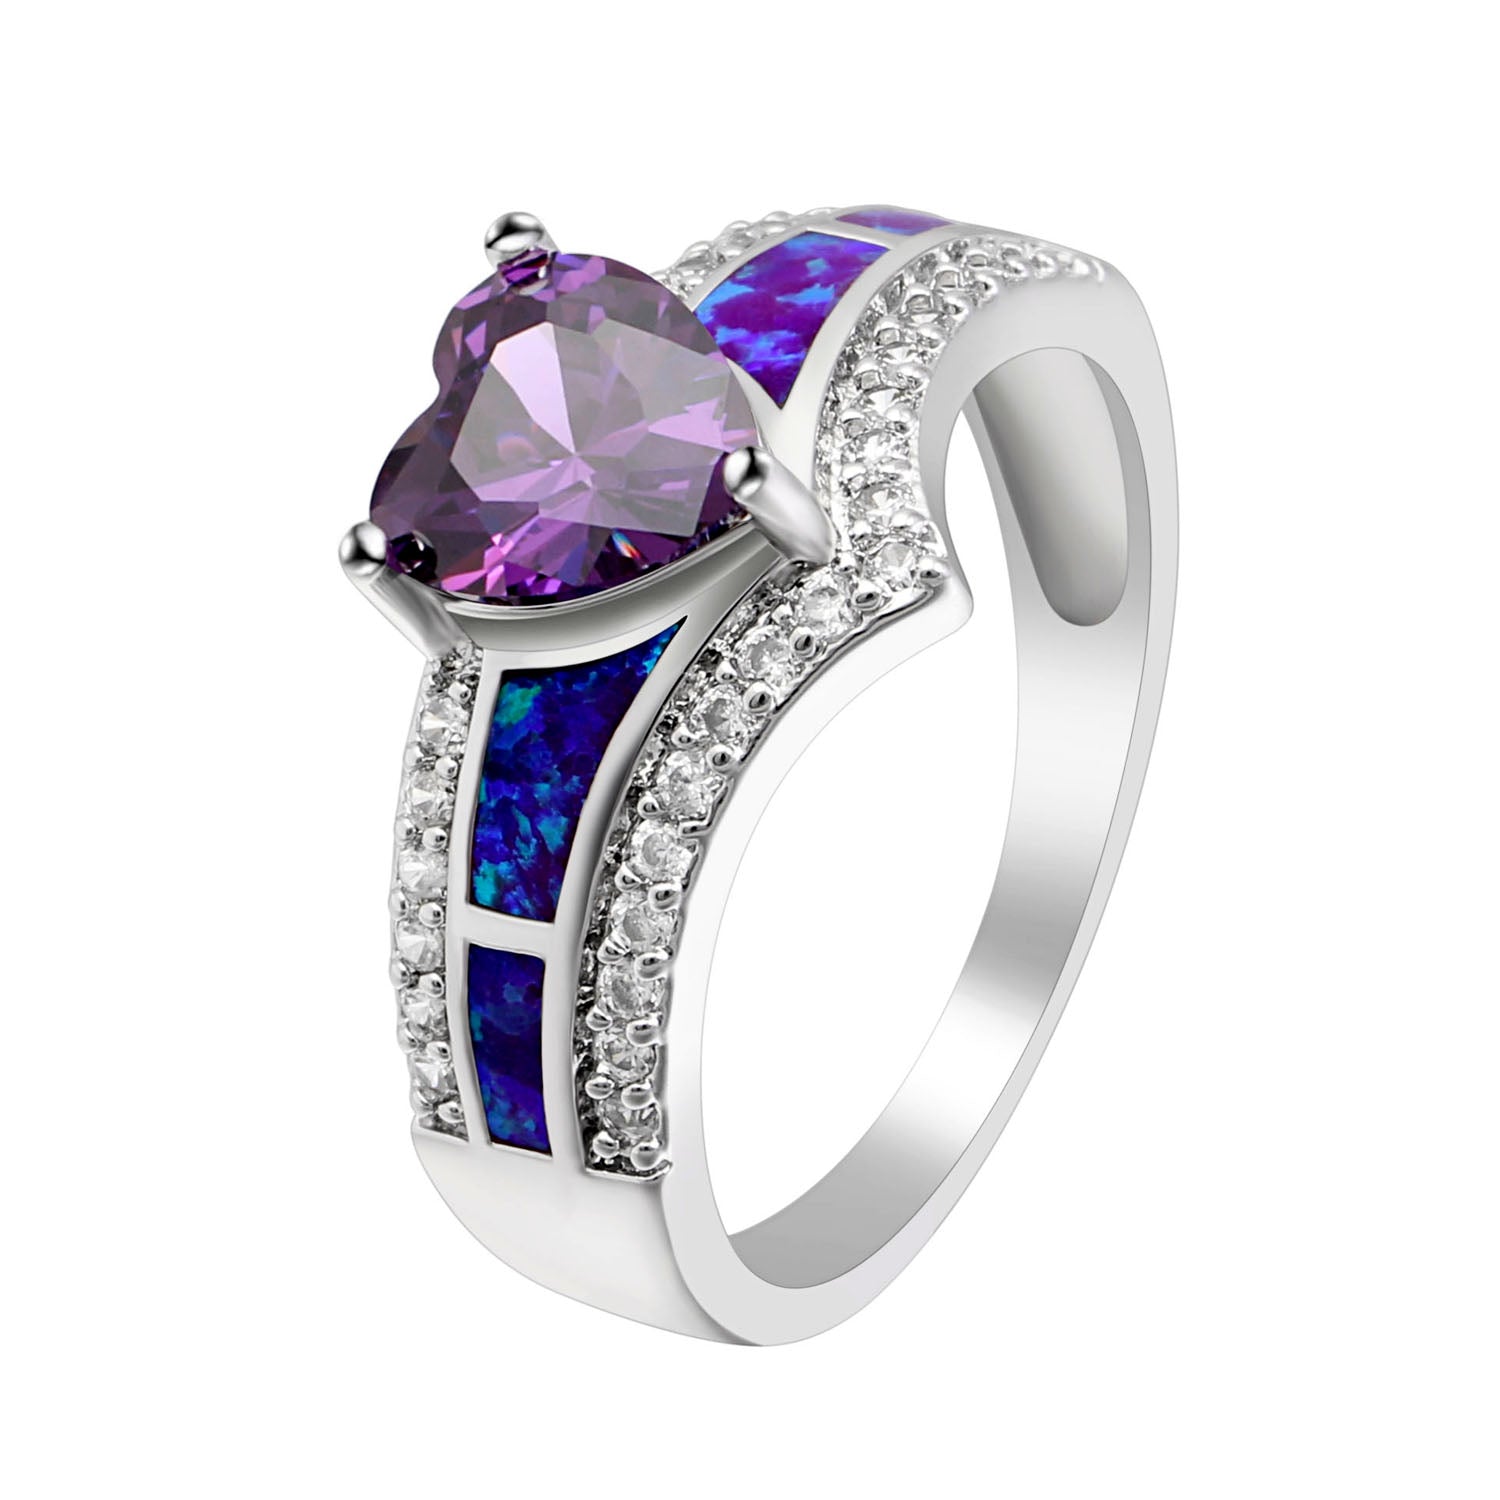 Majestic Heart Cz Promise Ring Created Fire Opal Girl Women Ginger Lyne - Purple,8